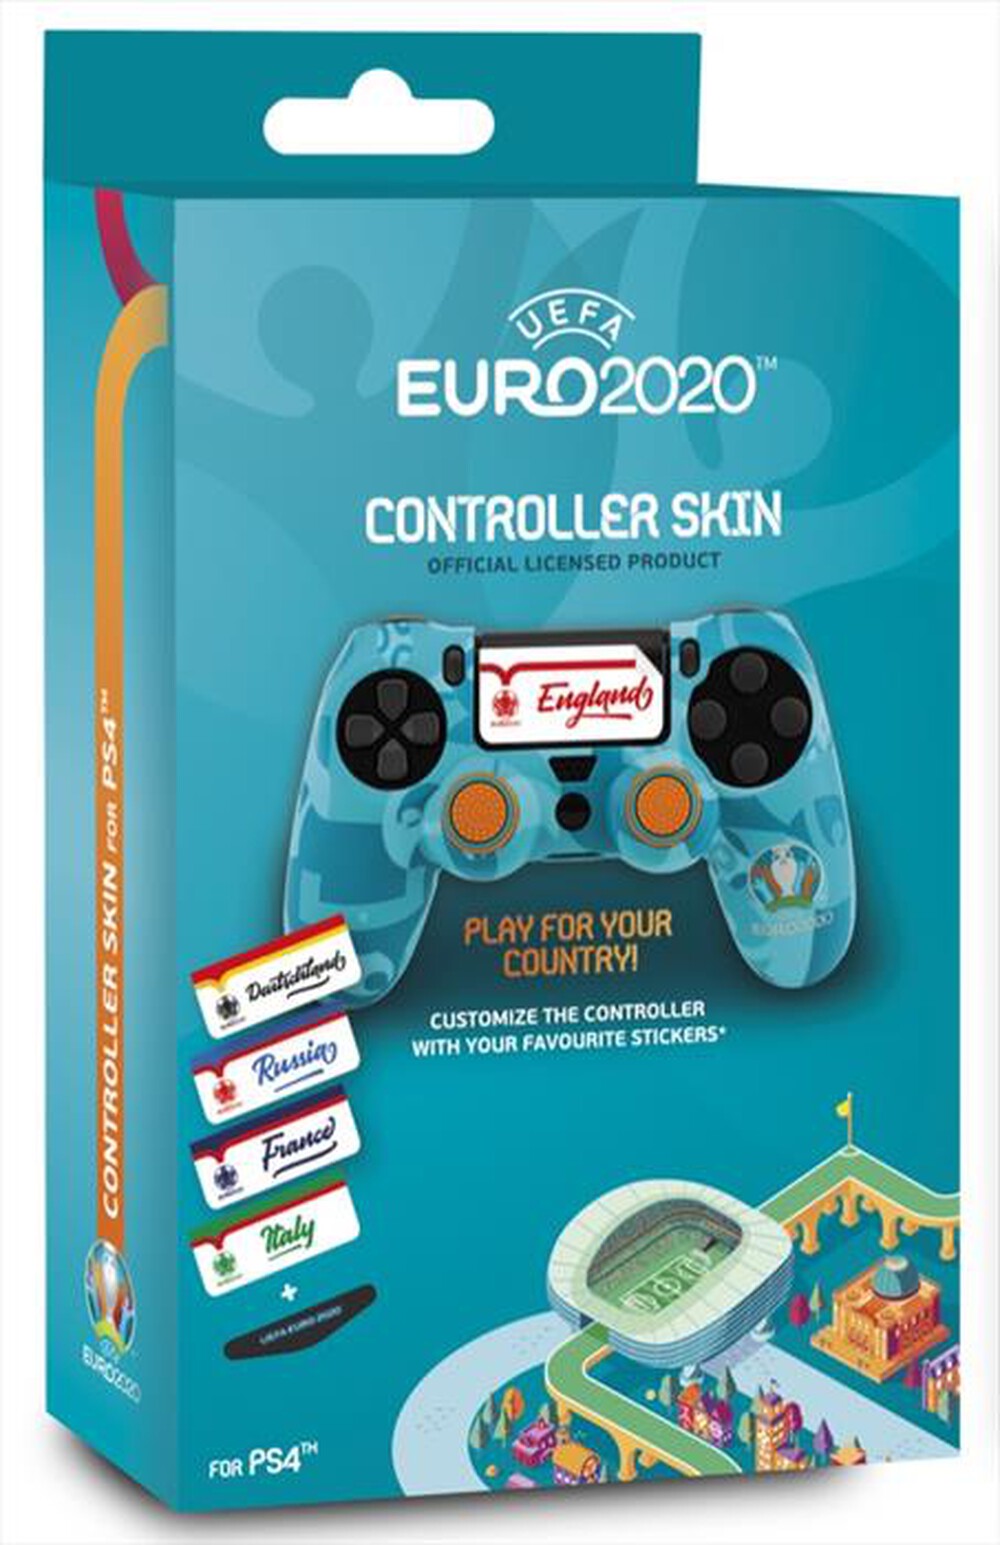 "QUBICK - CONTROLLER SKIN UEFA EURO 2020"